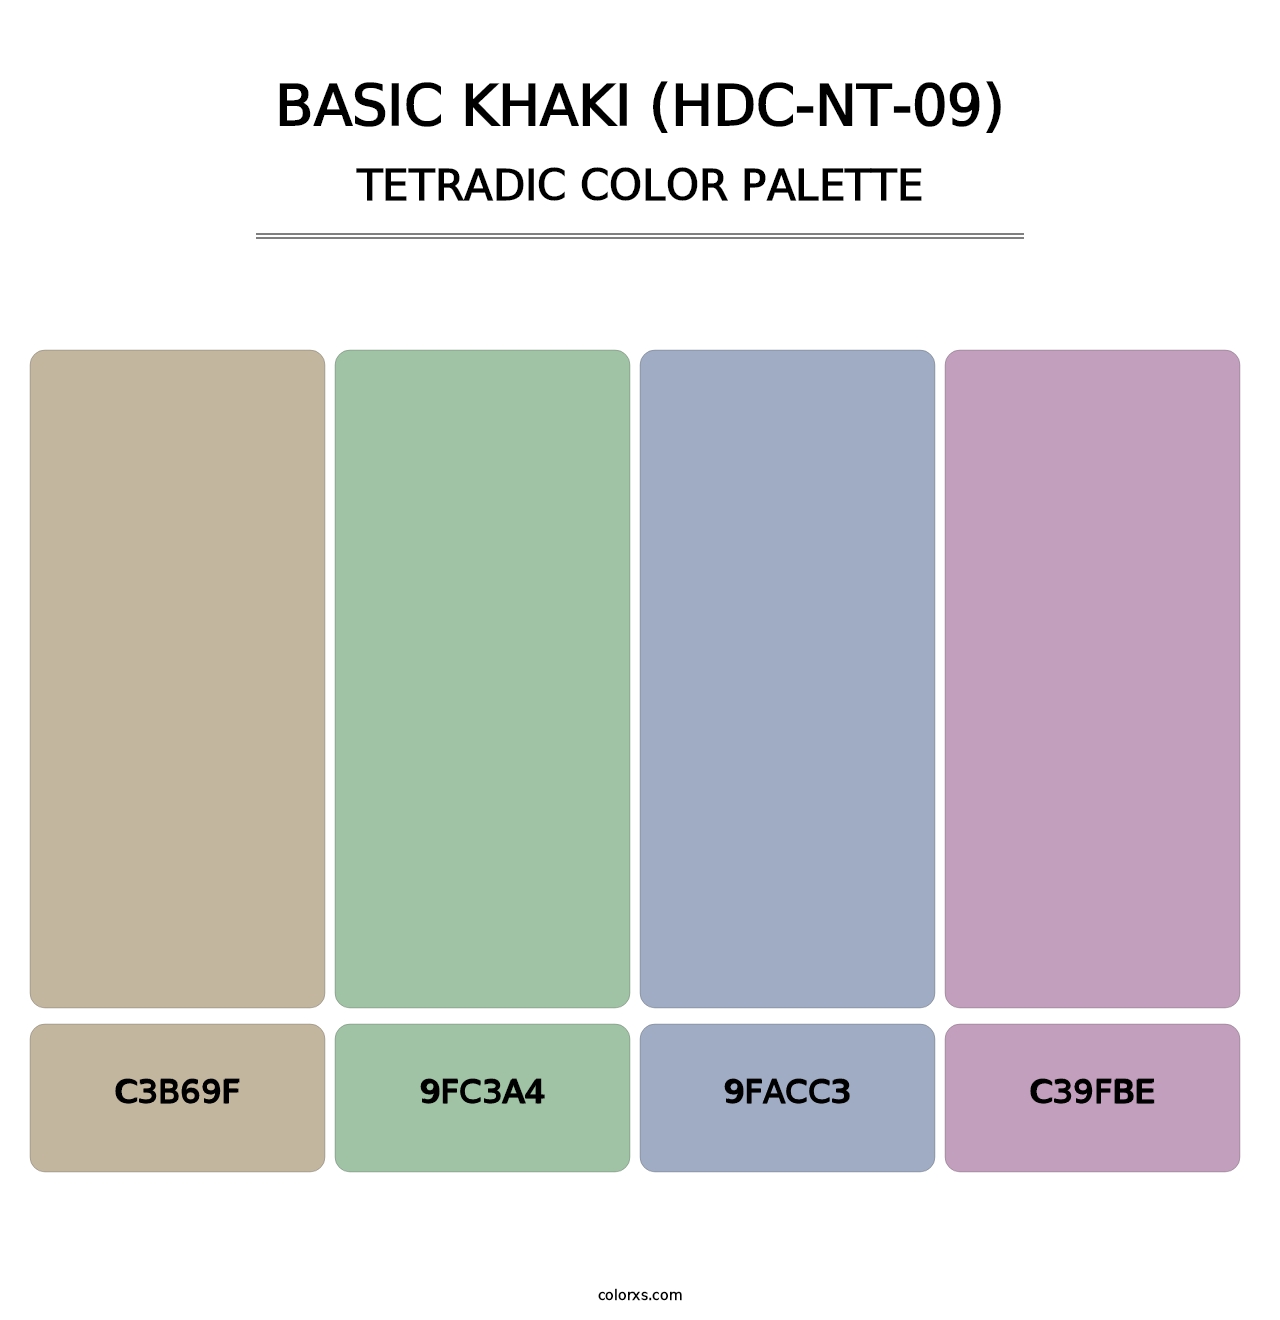 Basic Khaki (HDC-NT-09) - Tetradic Color Palette